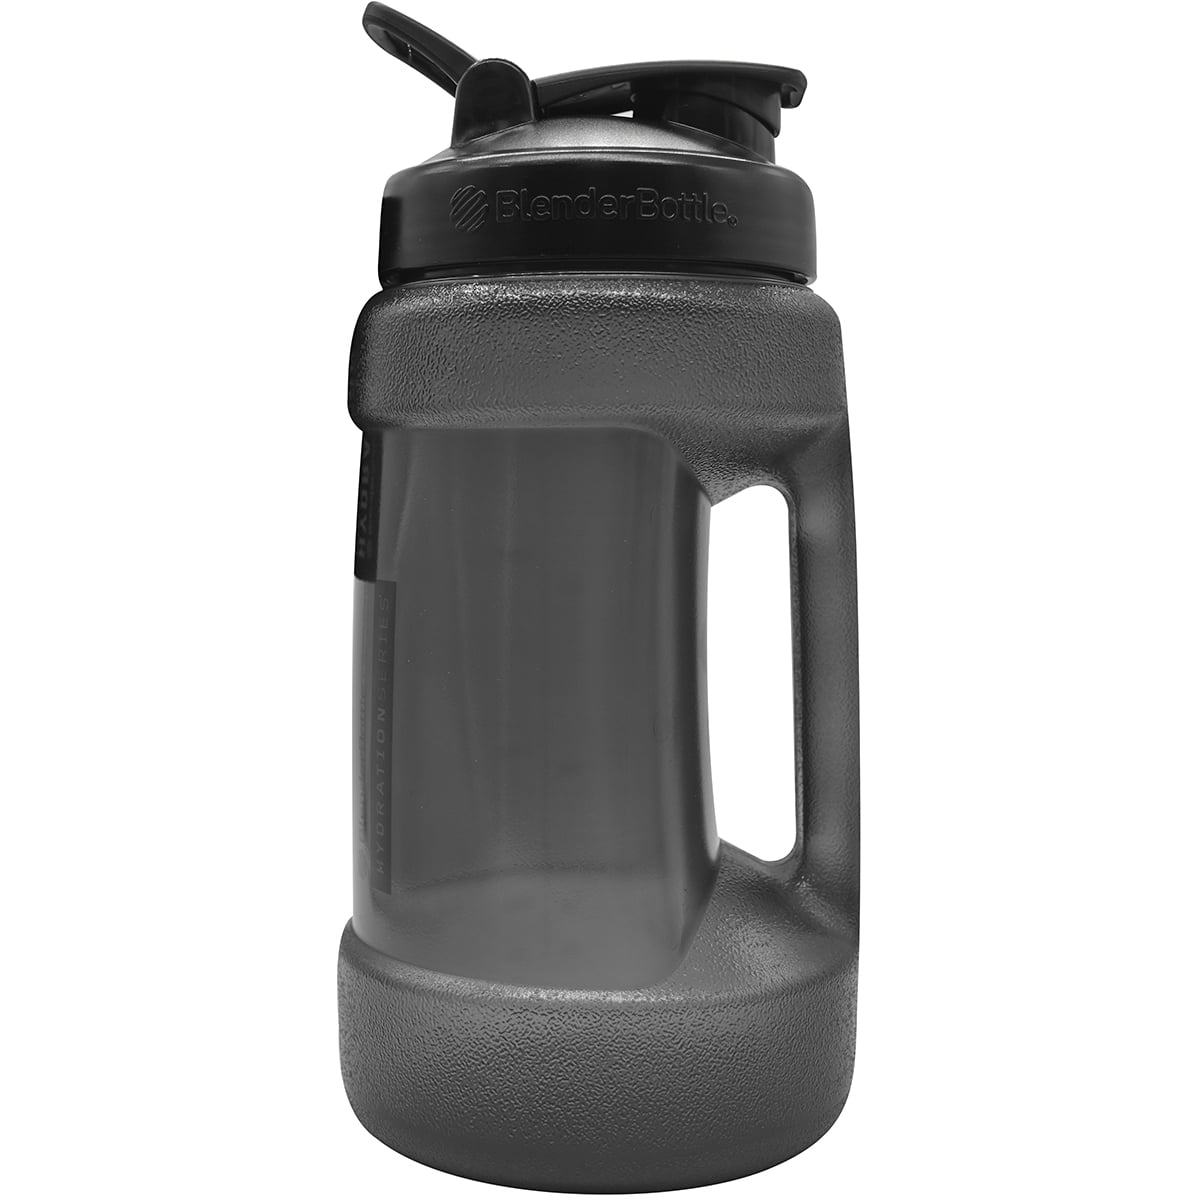 BlenderBottle【Koda】Marvel Half Gallon Water Bottle, Koda Large